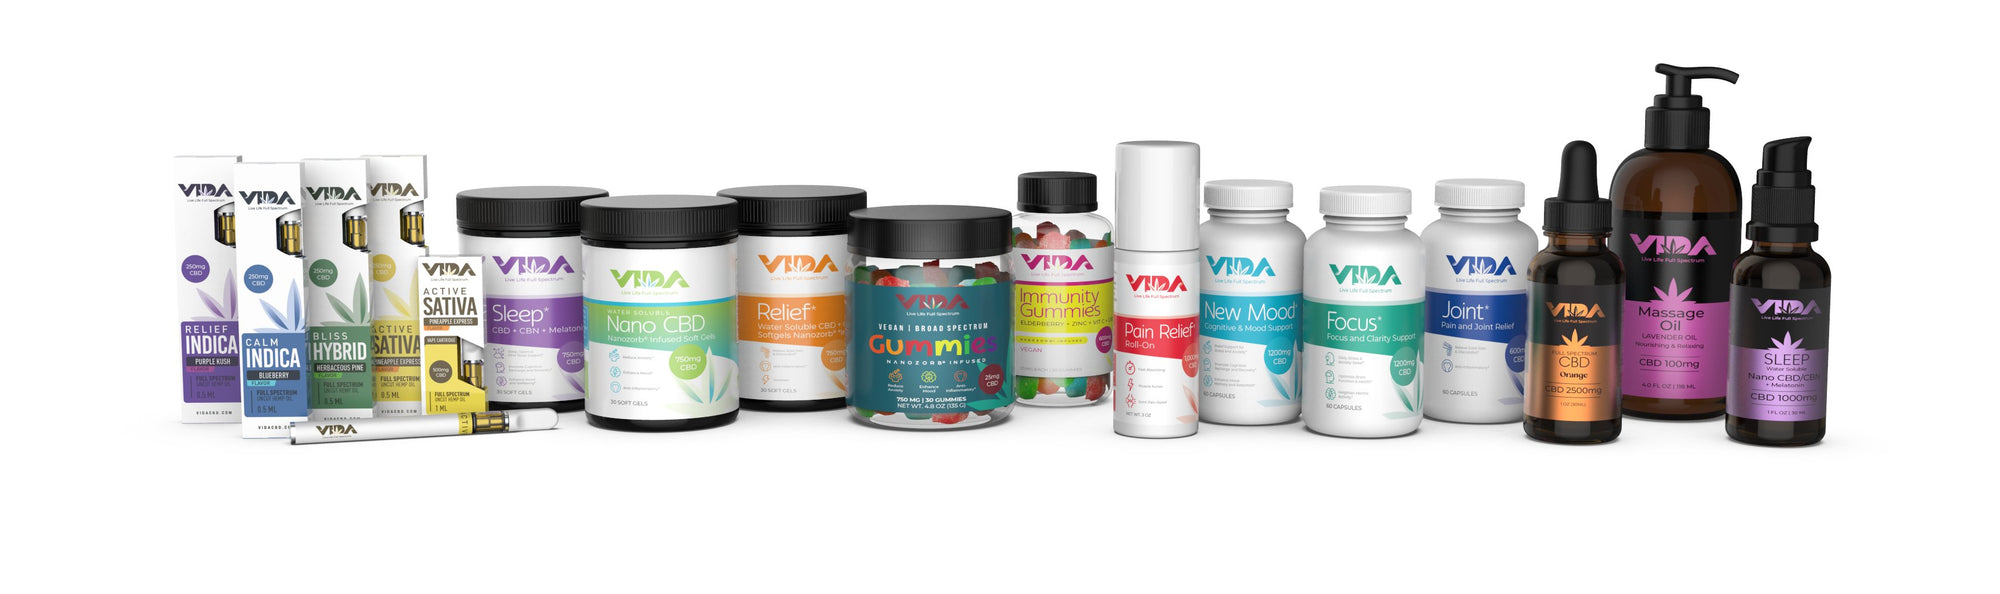 All VIDA Products